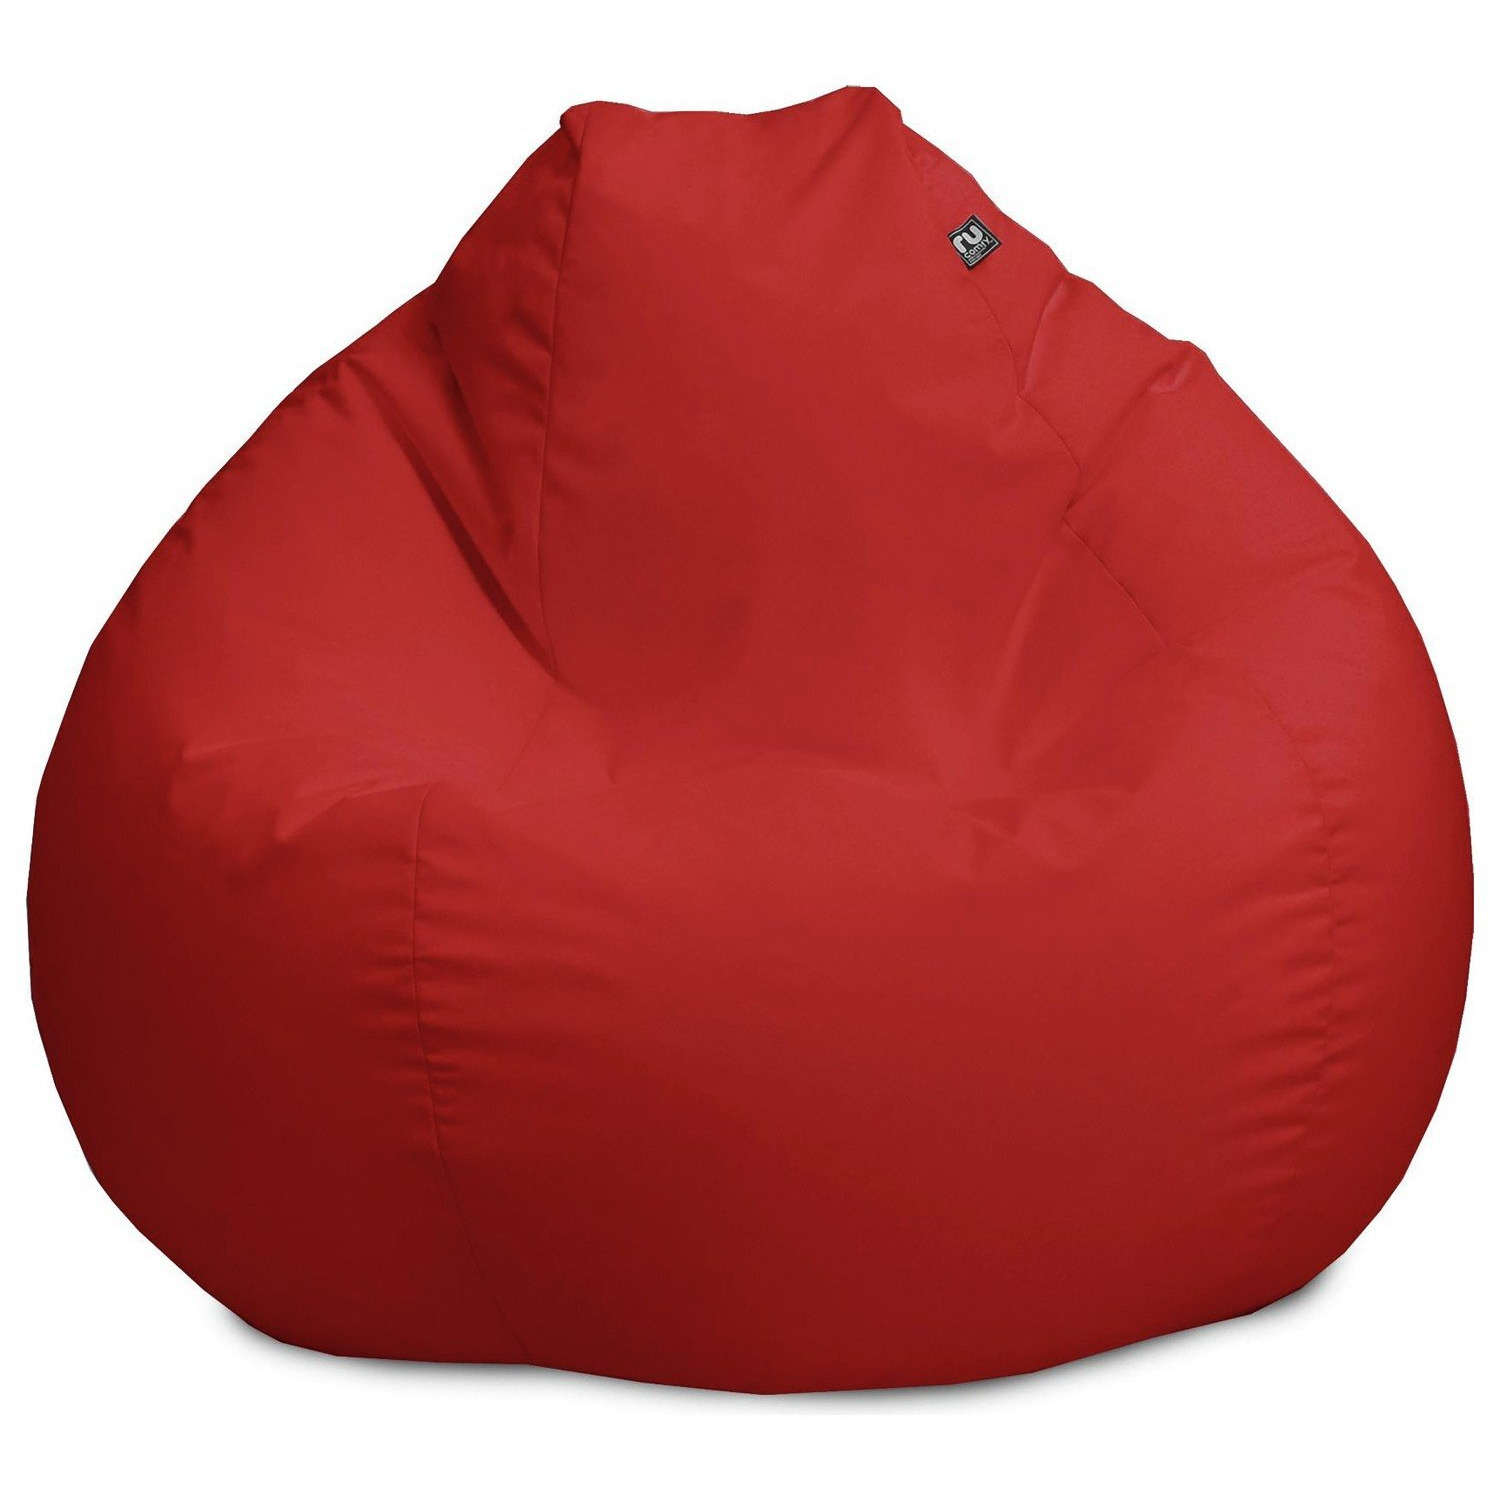 rucomfy Indoor Outdoor Bean Bag - Red - image 1